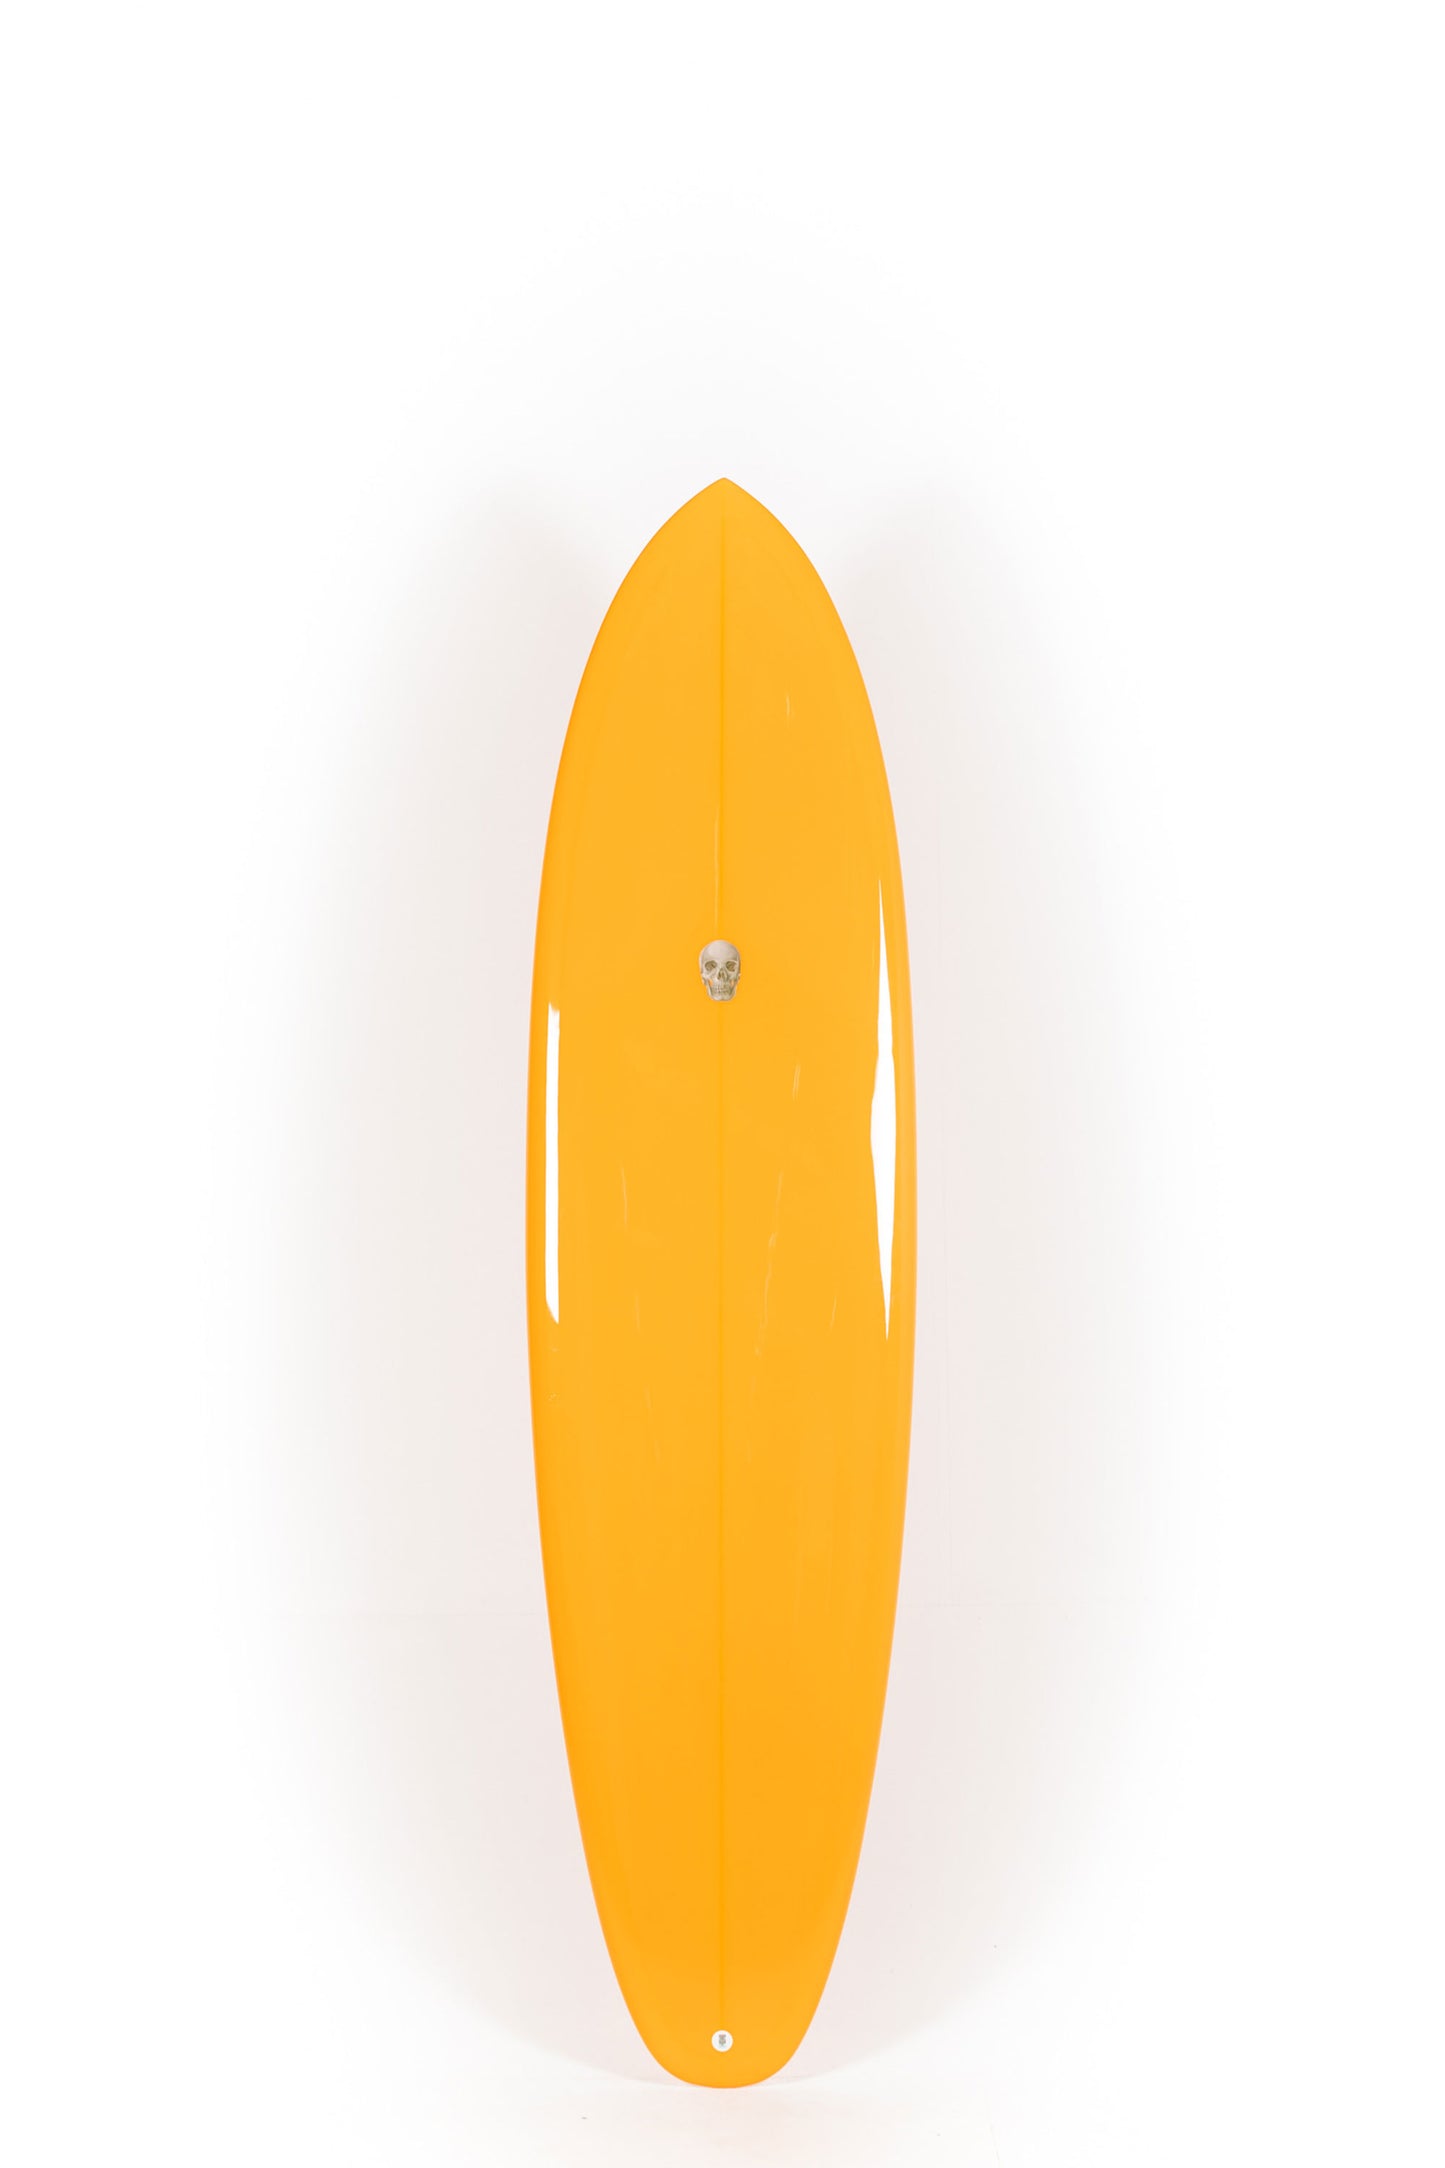 Pukas Surf Shop - Christenson Surfboards - TWIN TRACKER - 7'2" x 21 1/4  x 2 7/8 - CX03311